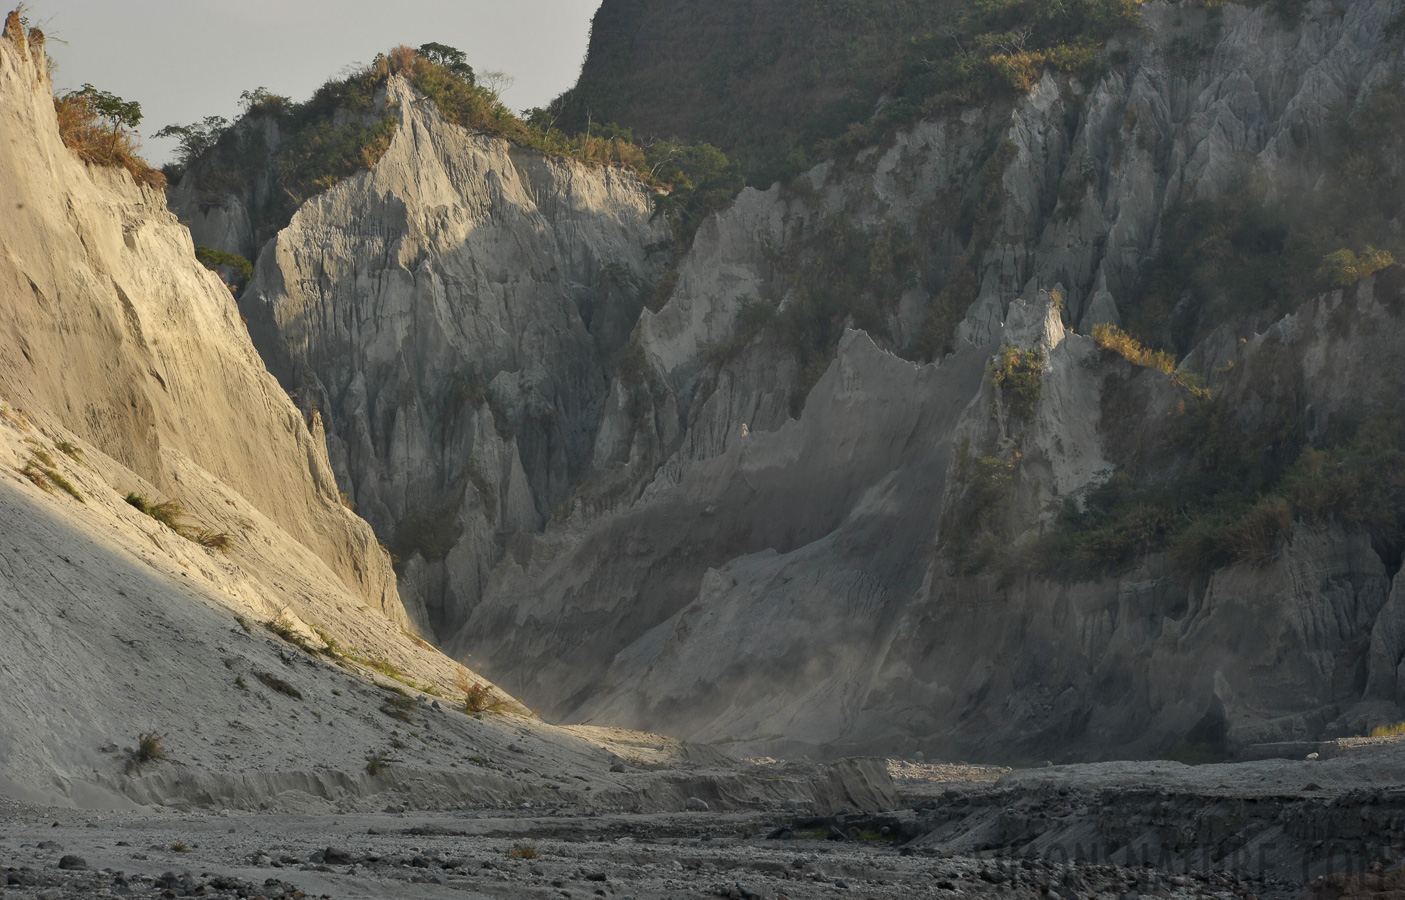 Mount Pinatubo [190 mm, 1/250 sec at f / 14, ISO 400]